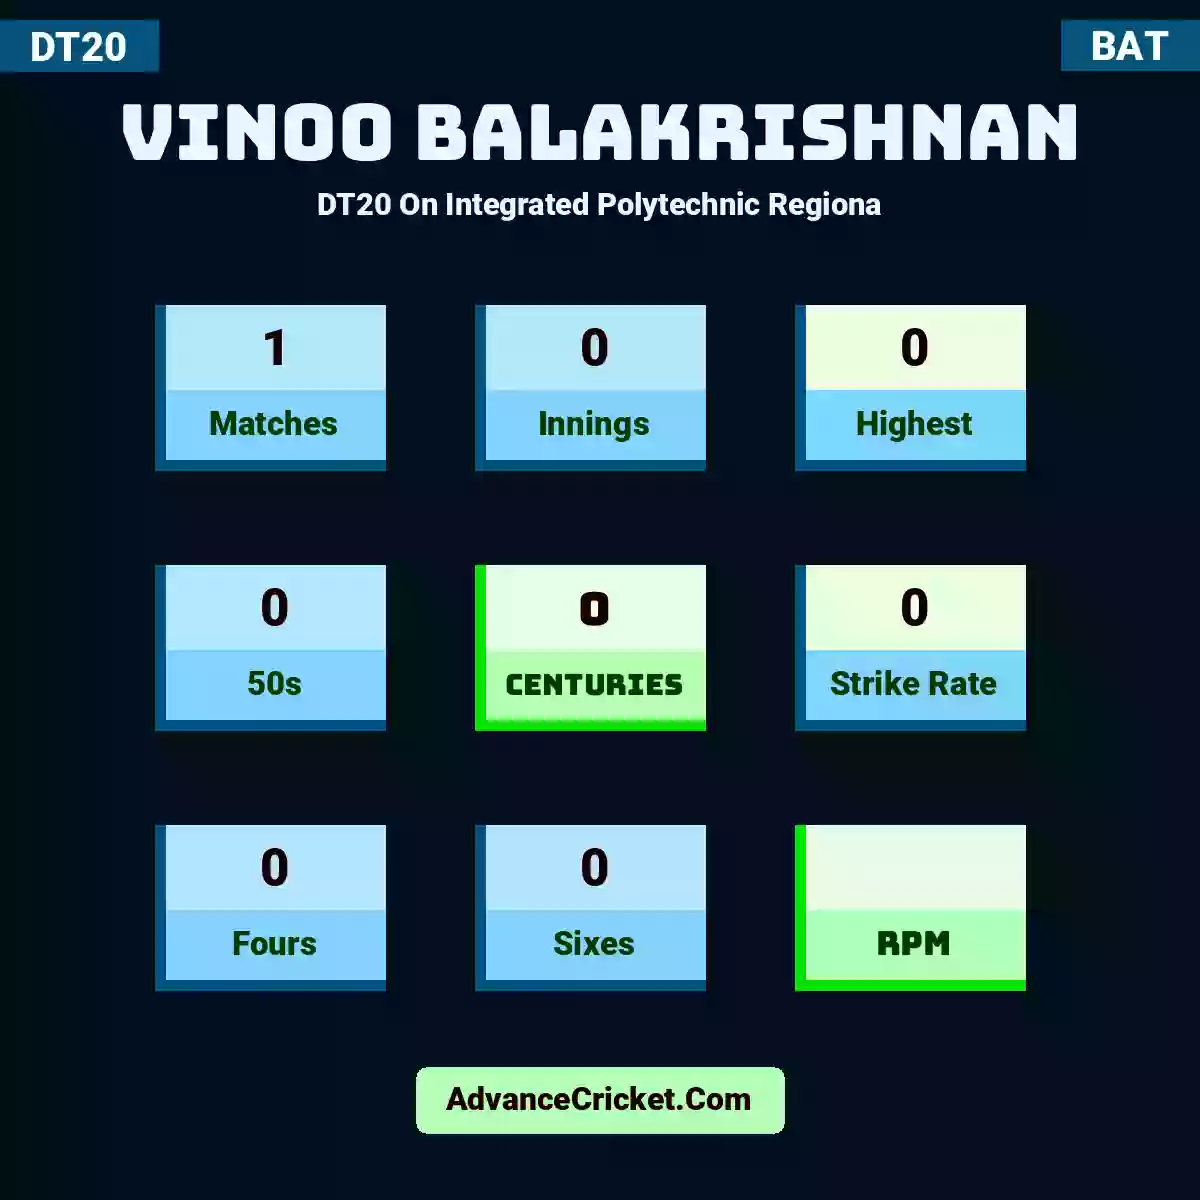 Vinoo Balakrishnan DT20  On Integrated Polytechnic Regiona, Vinoo Balakrishnan played 1 matches, scored 0 runs as highest, 0 half-centuries, and 0 centuries, with a strike rate of 0. V.Balakrishnan hit 0 fours and 0 sixes.